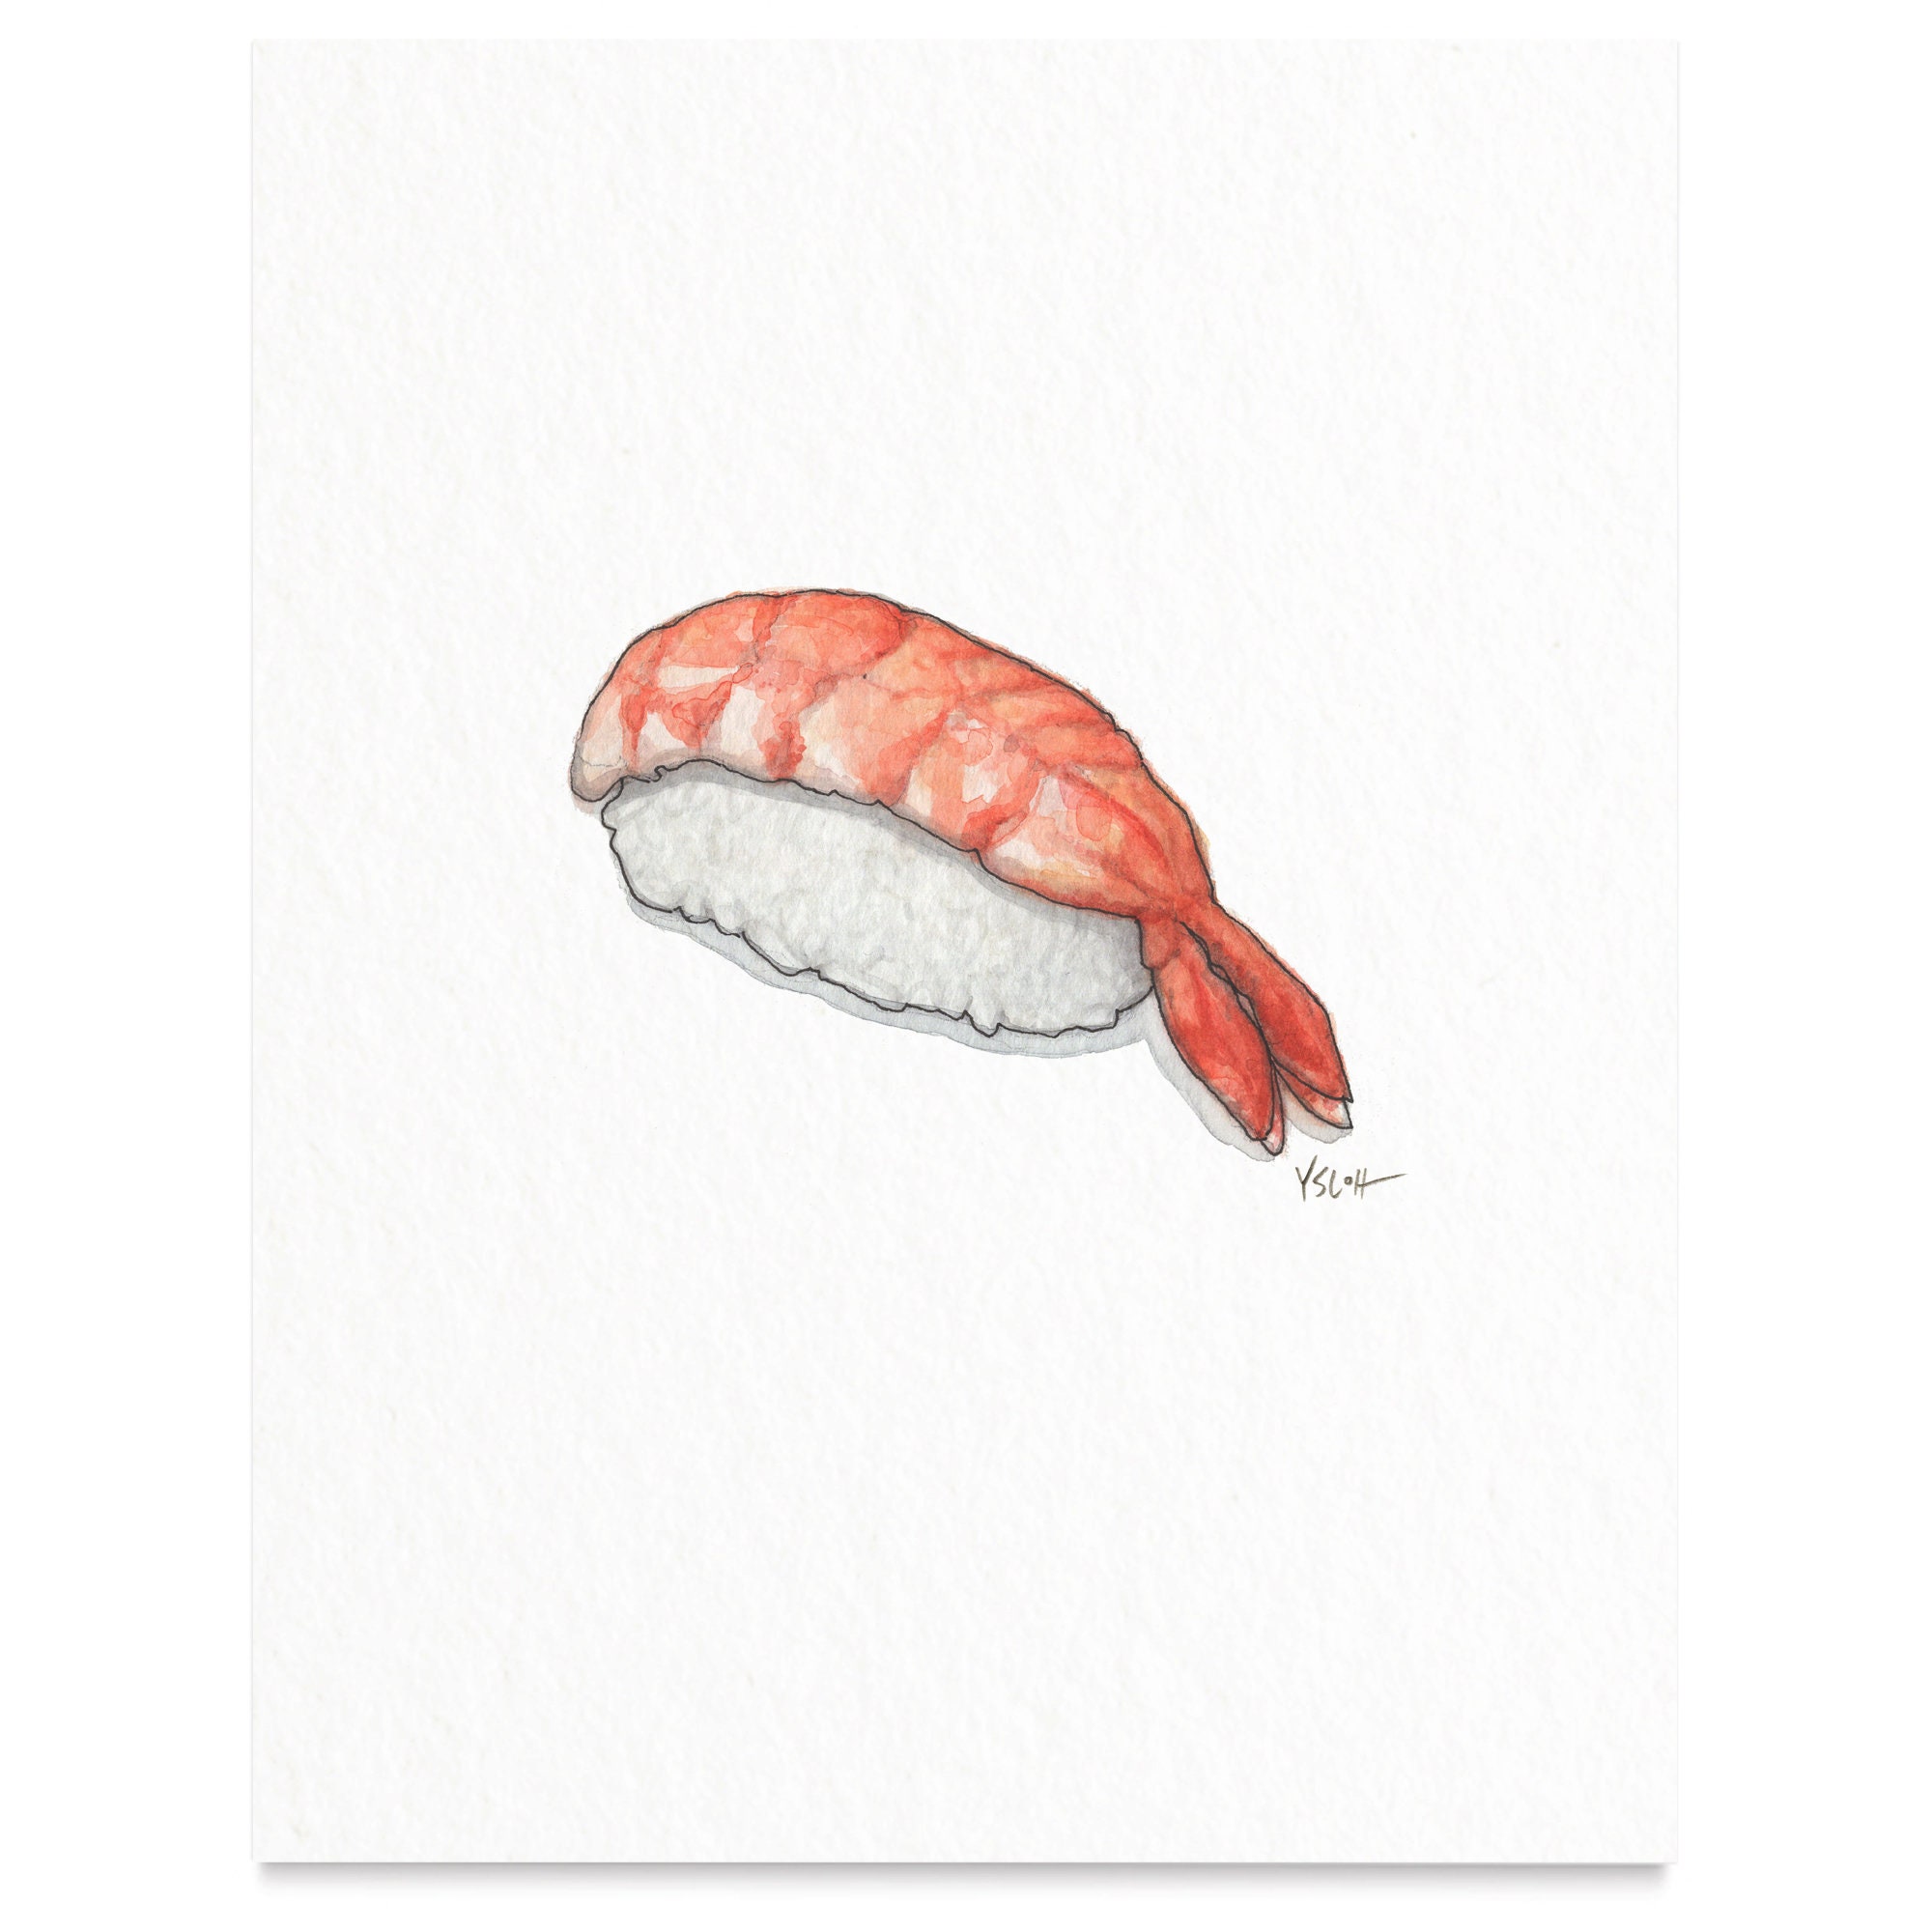 Sushi | Nigiri 8.5x11 Art Prints/Watercolor Illustration Print Home Decor Food Japanese Cuisine Seafood